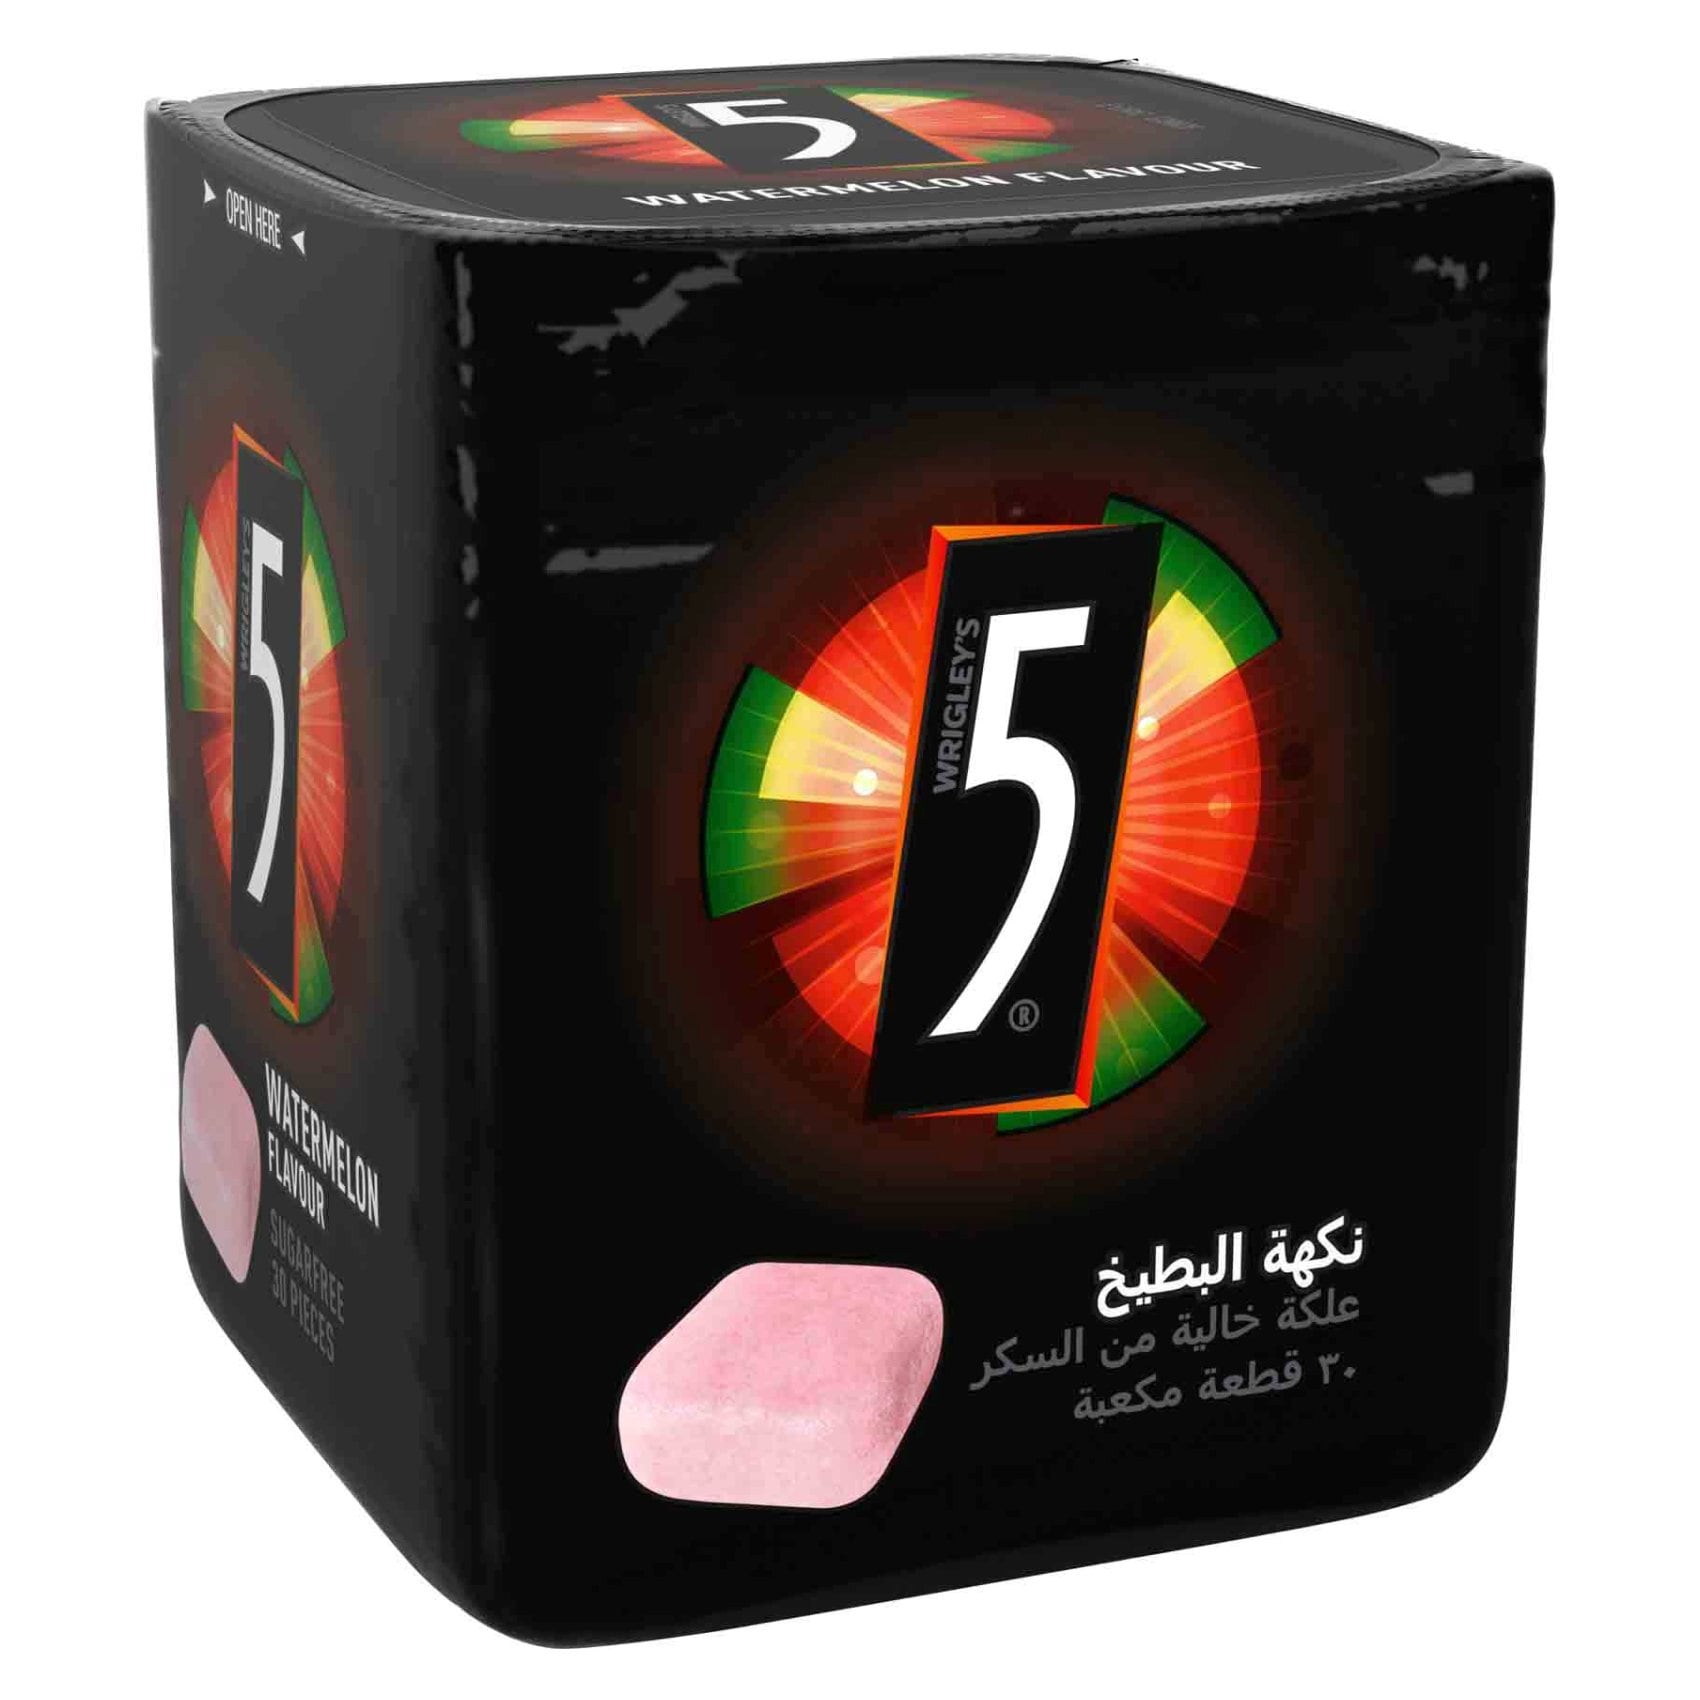 5 - 5, Gum, Sugarfree, Watermelon Prism (15 count), Shop